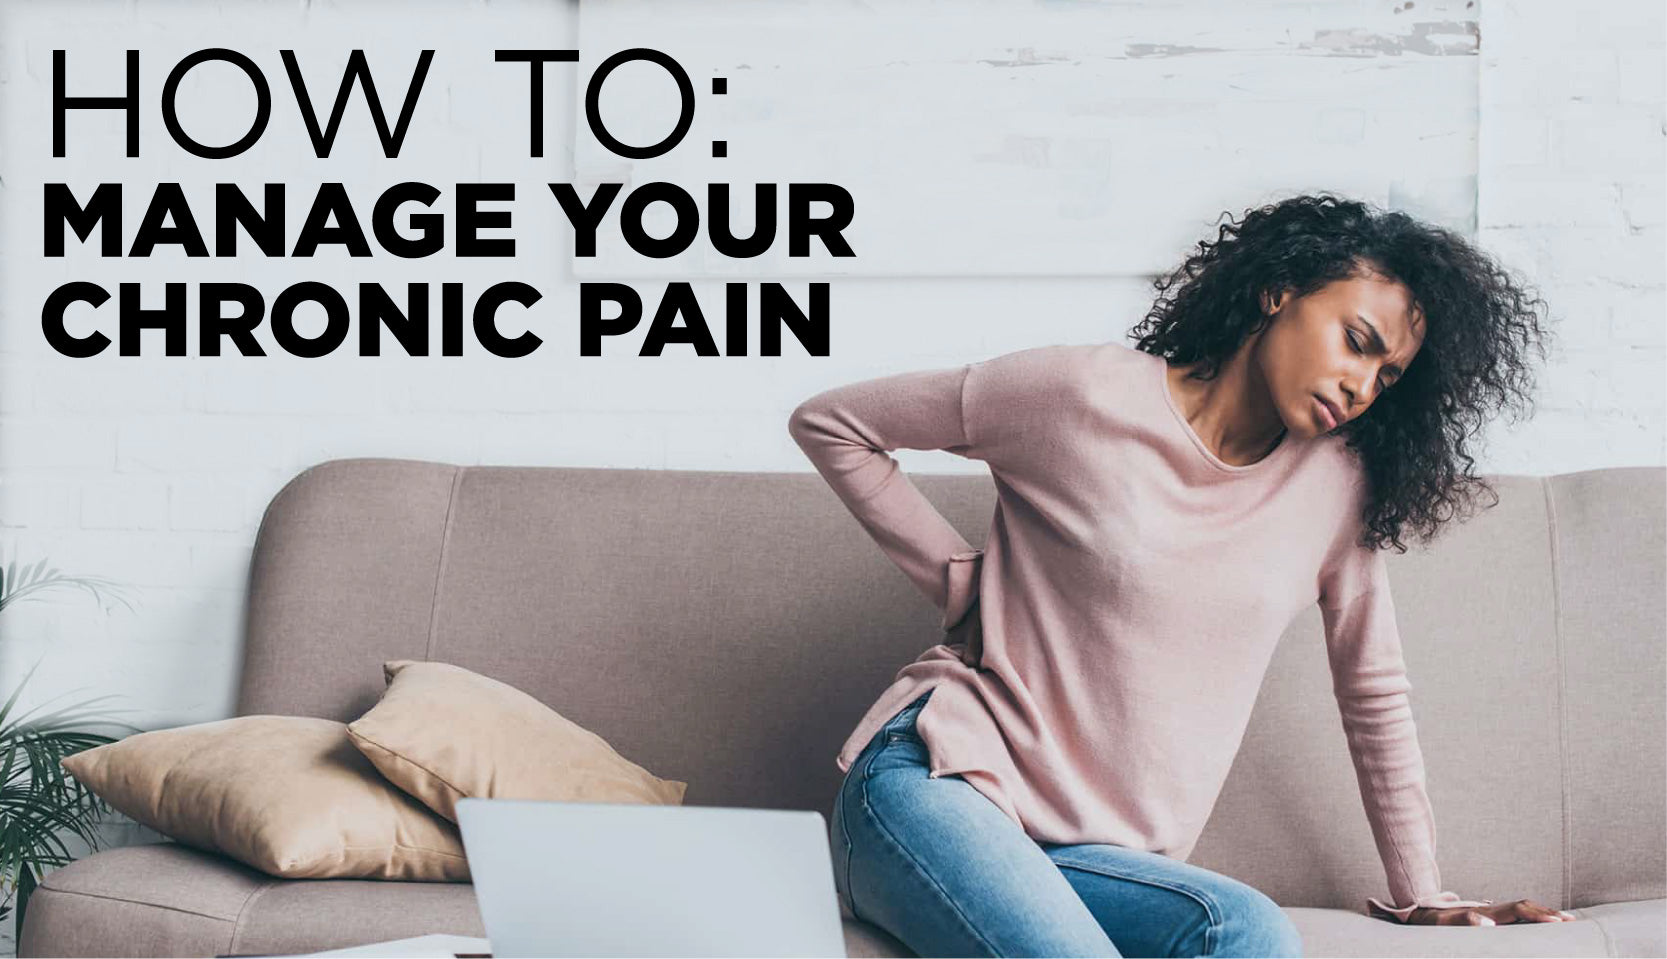 Chronic Pain Management 6 Simple Methods